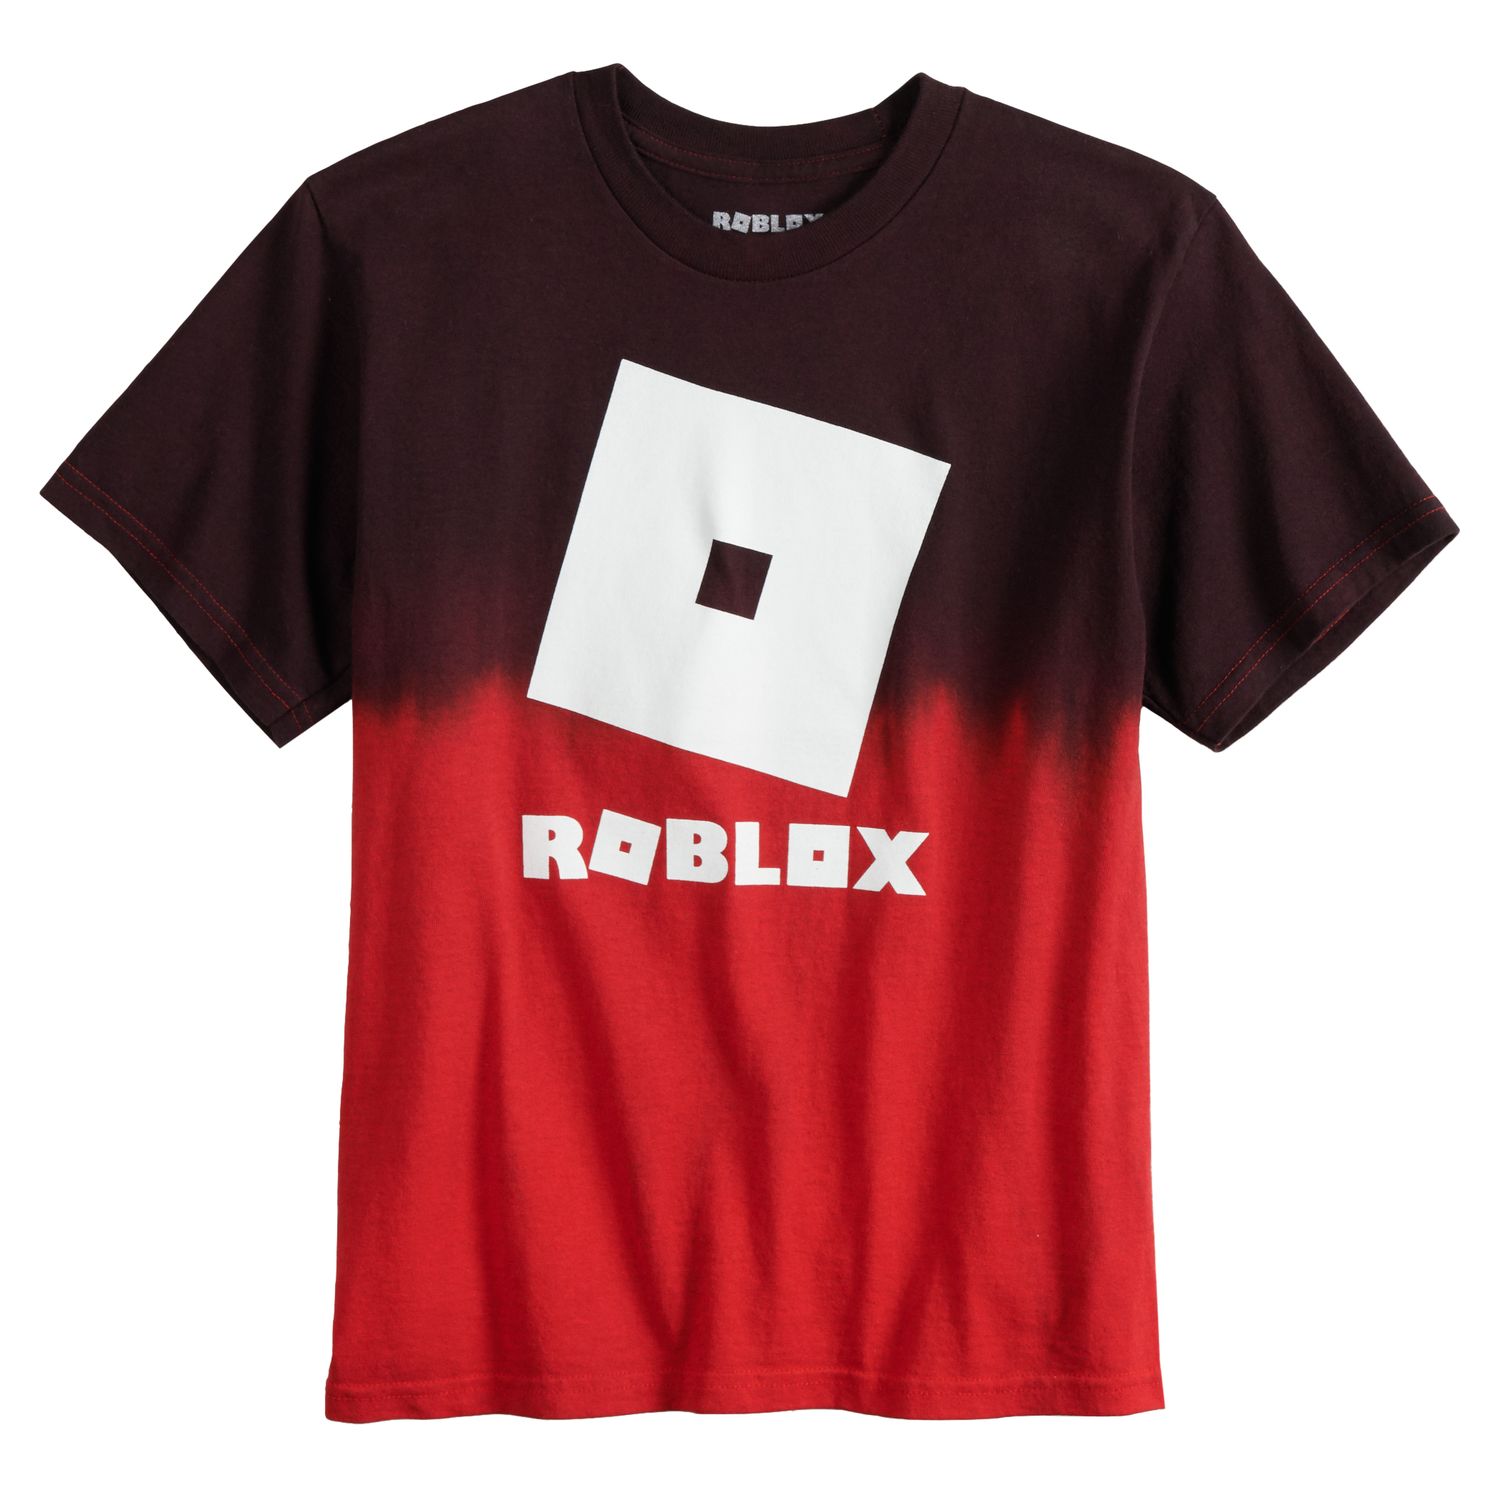 Roblox T Shirt For Boys - 8 robux shirts